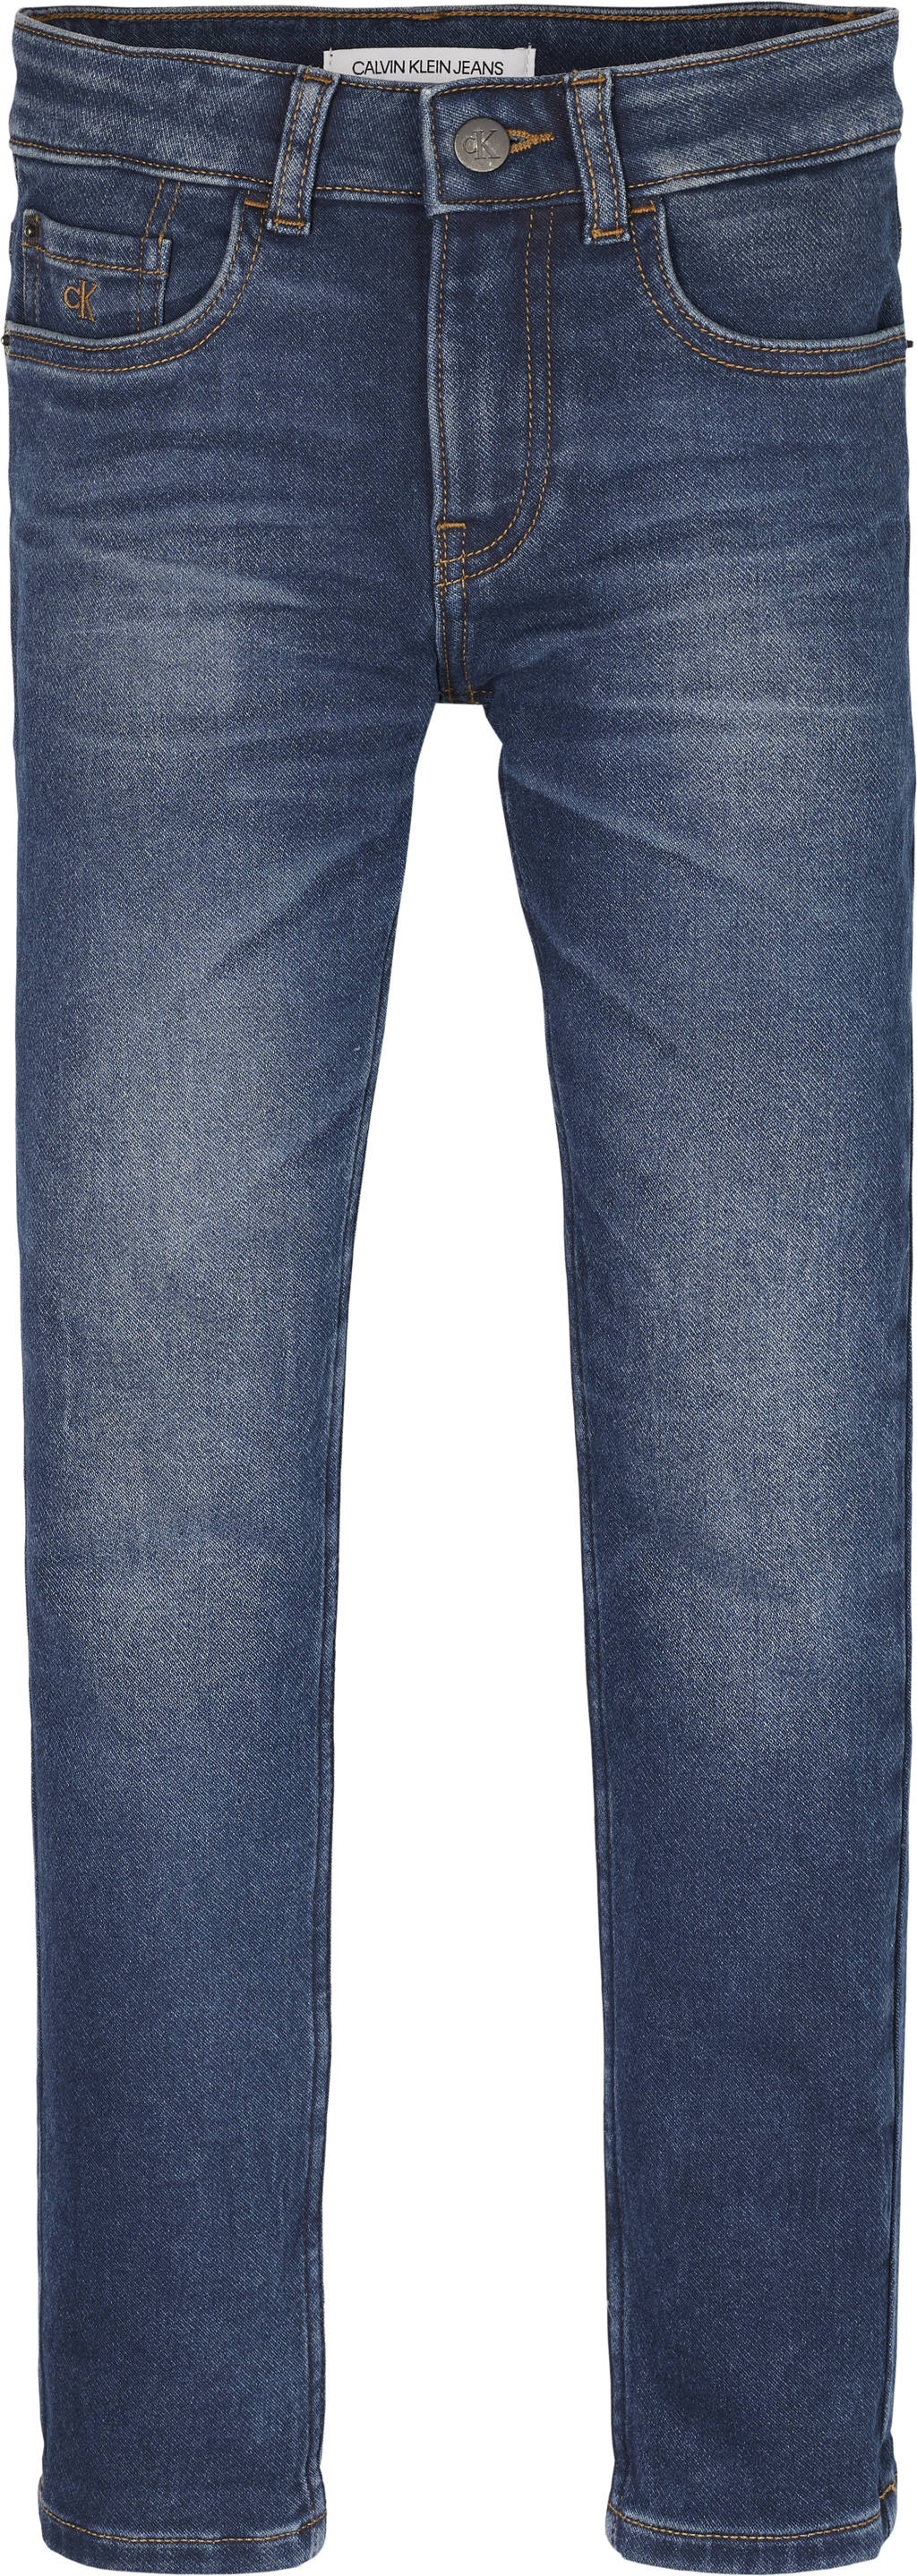 CALVIN KLEIN JEANS skinny jeans Washed Blue, Washed blue